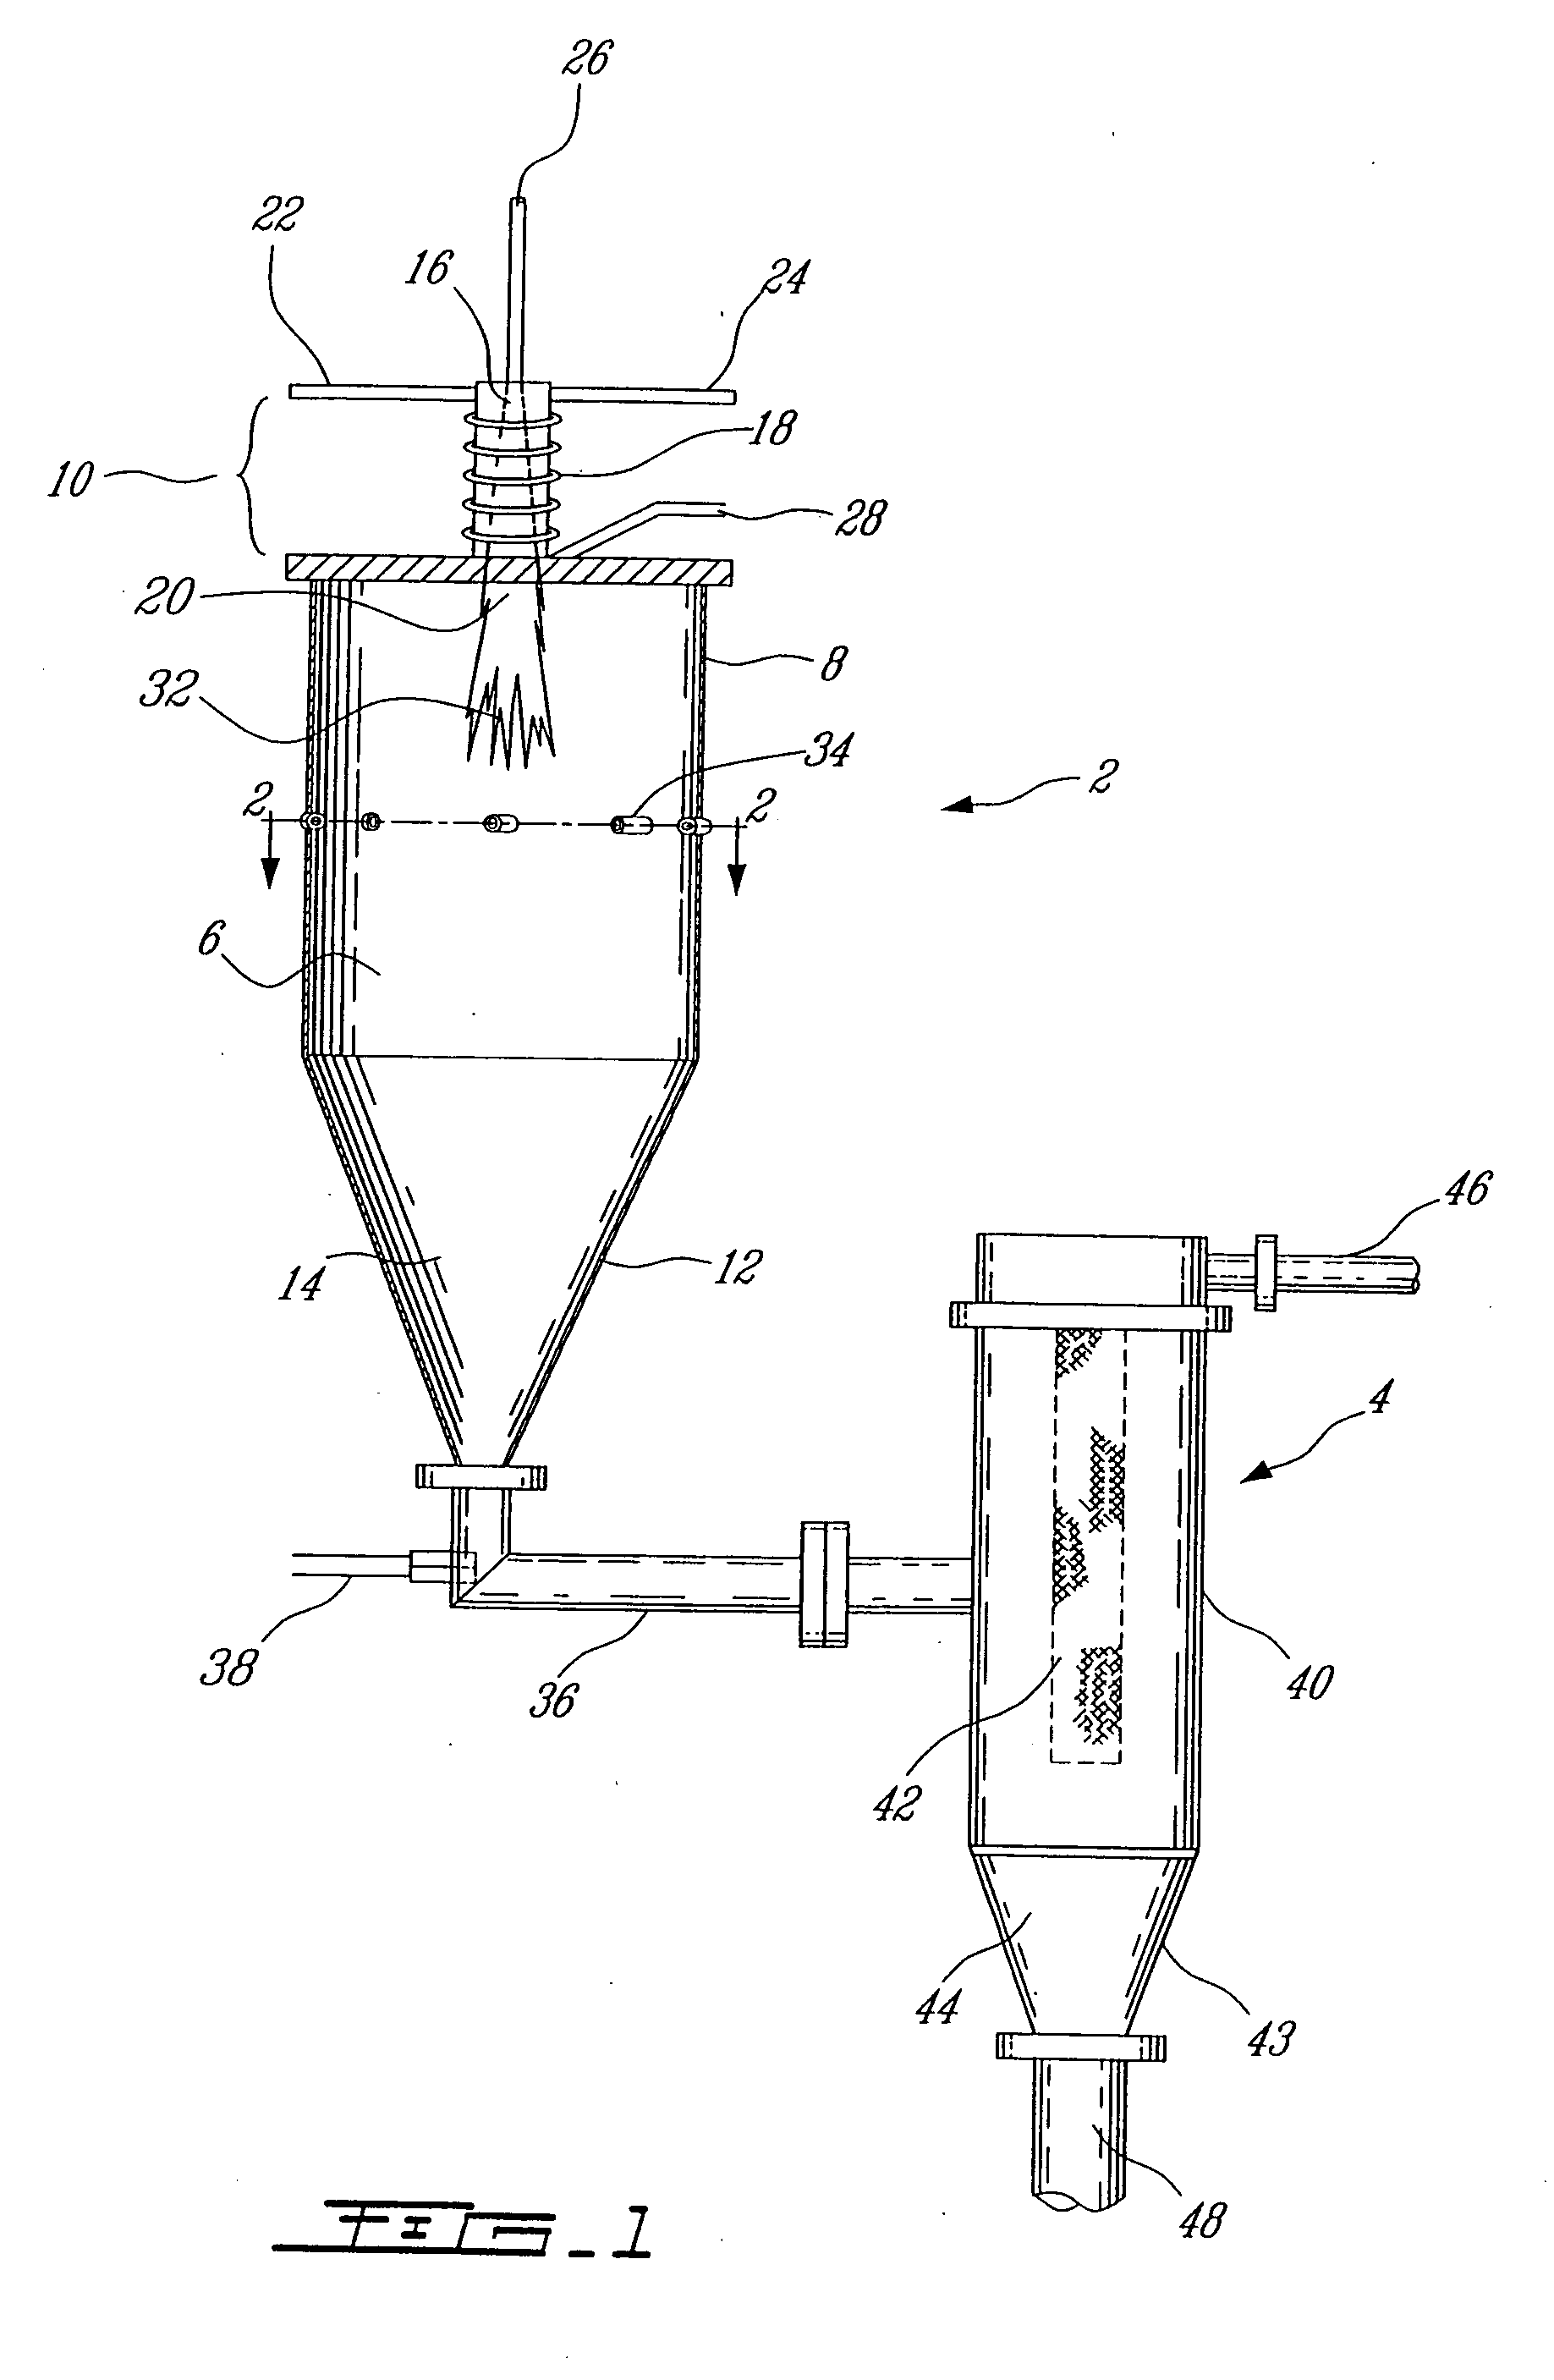 Apparatus for plasma synthesis of metal oxide nanopowder